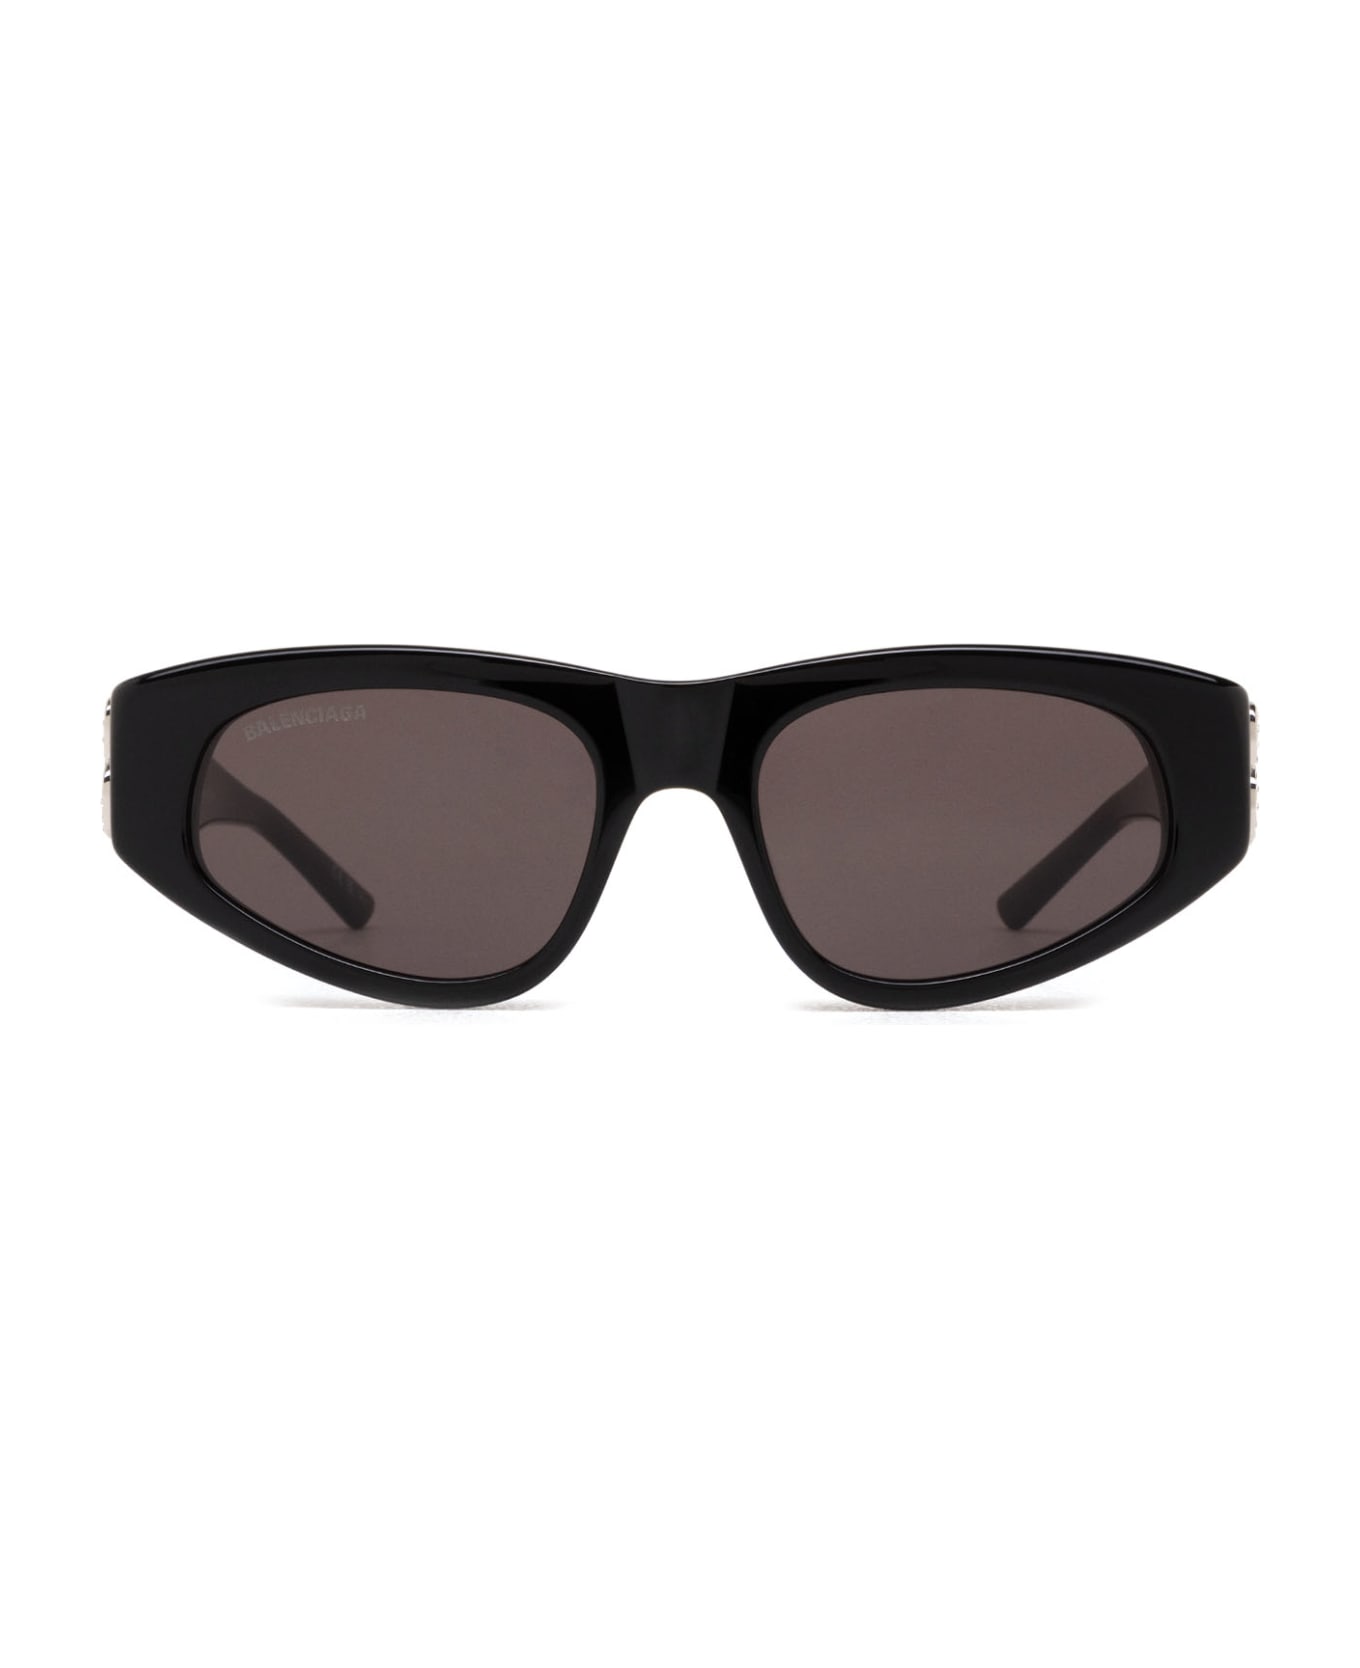 Balenciaga Eyewear Crystal Embellished Bb Hinge Sunglasses - Black